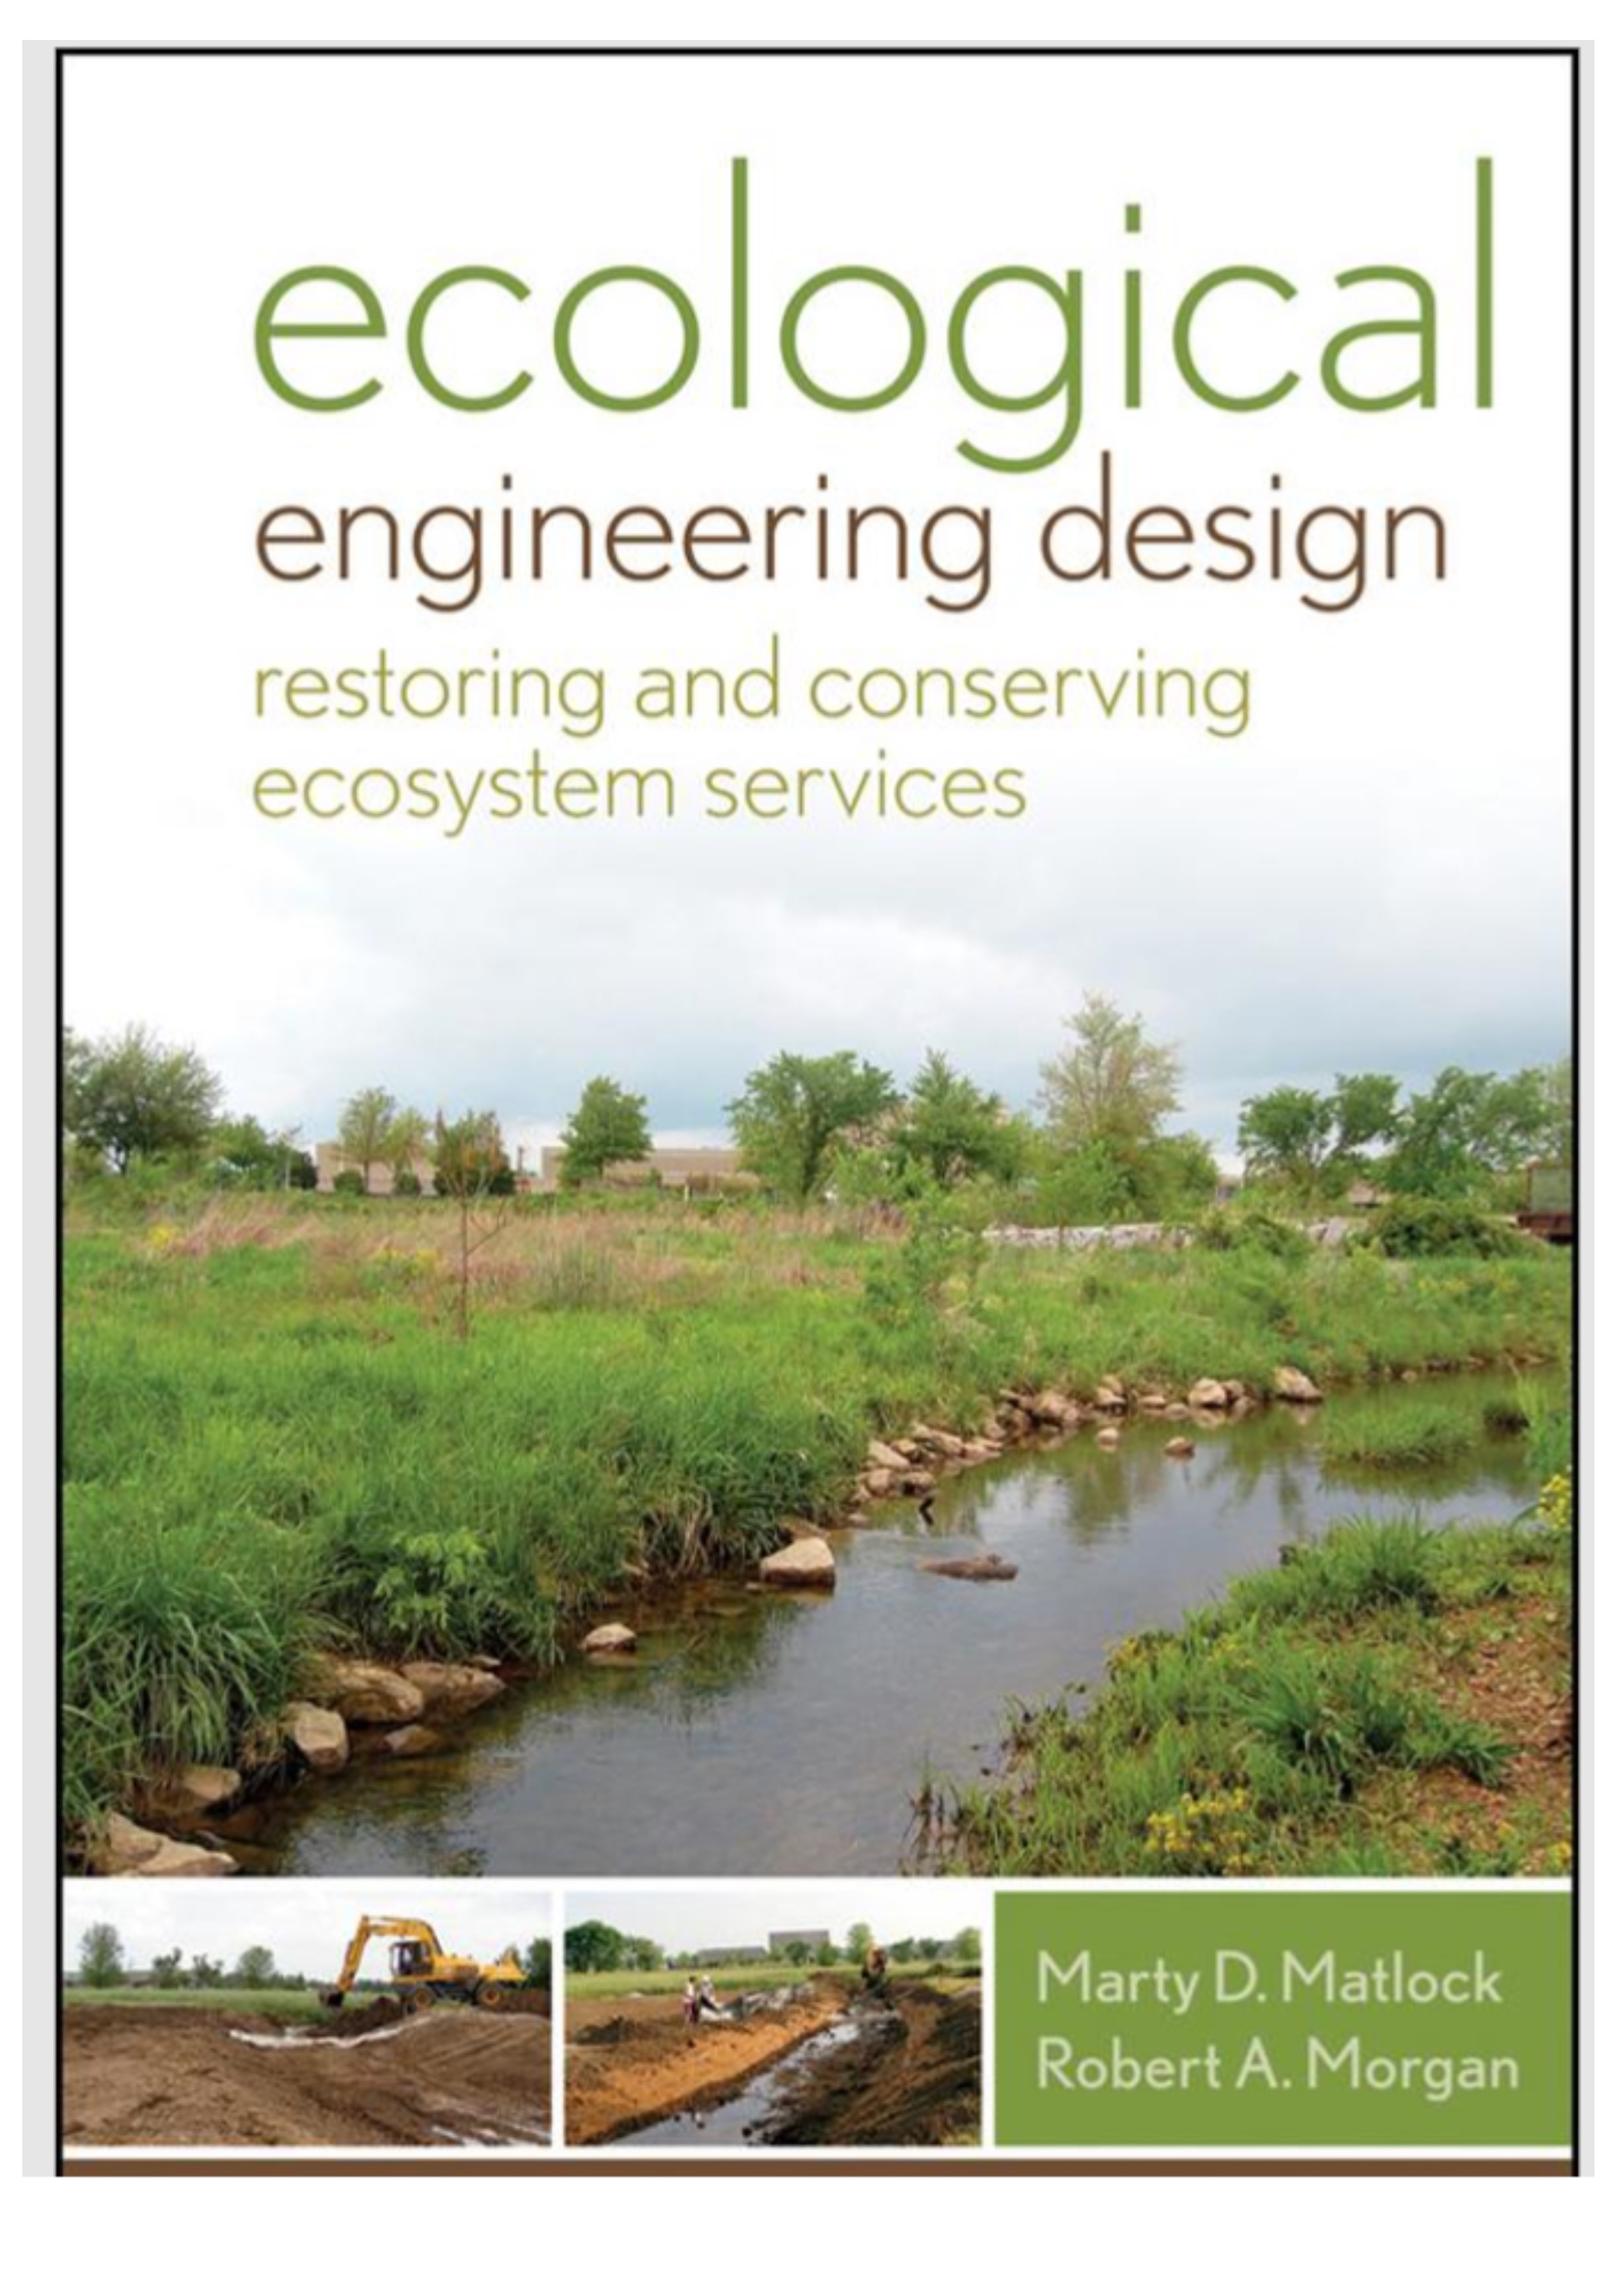 Ecological Engineering Design